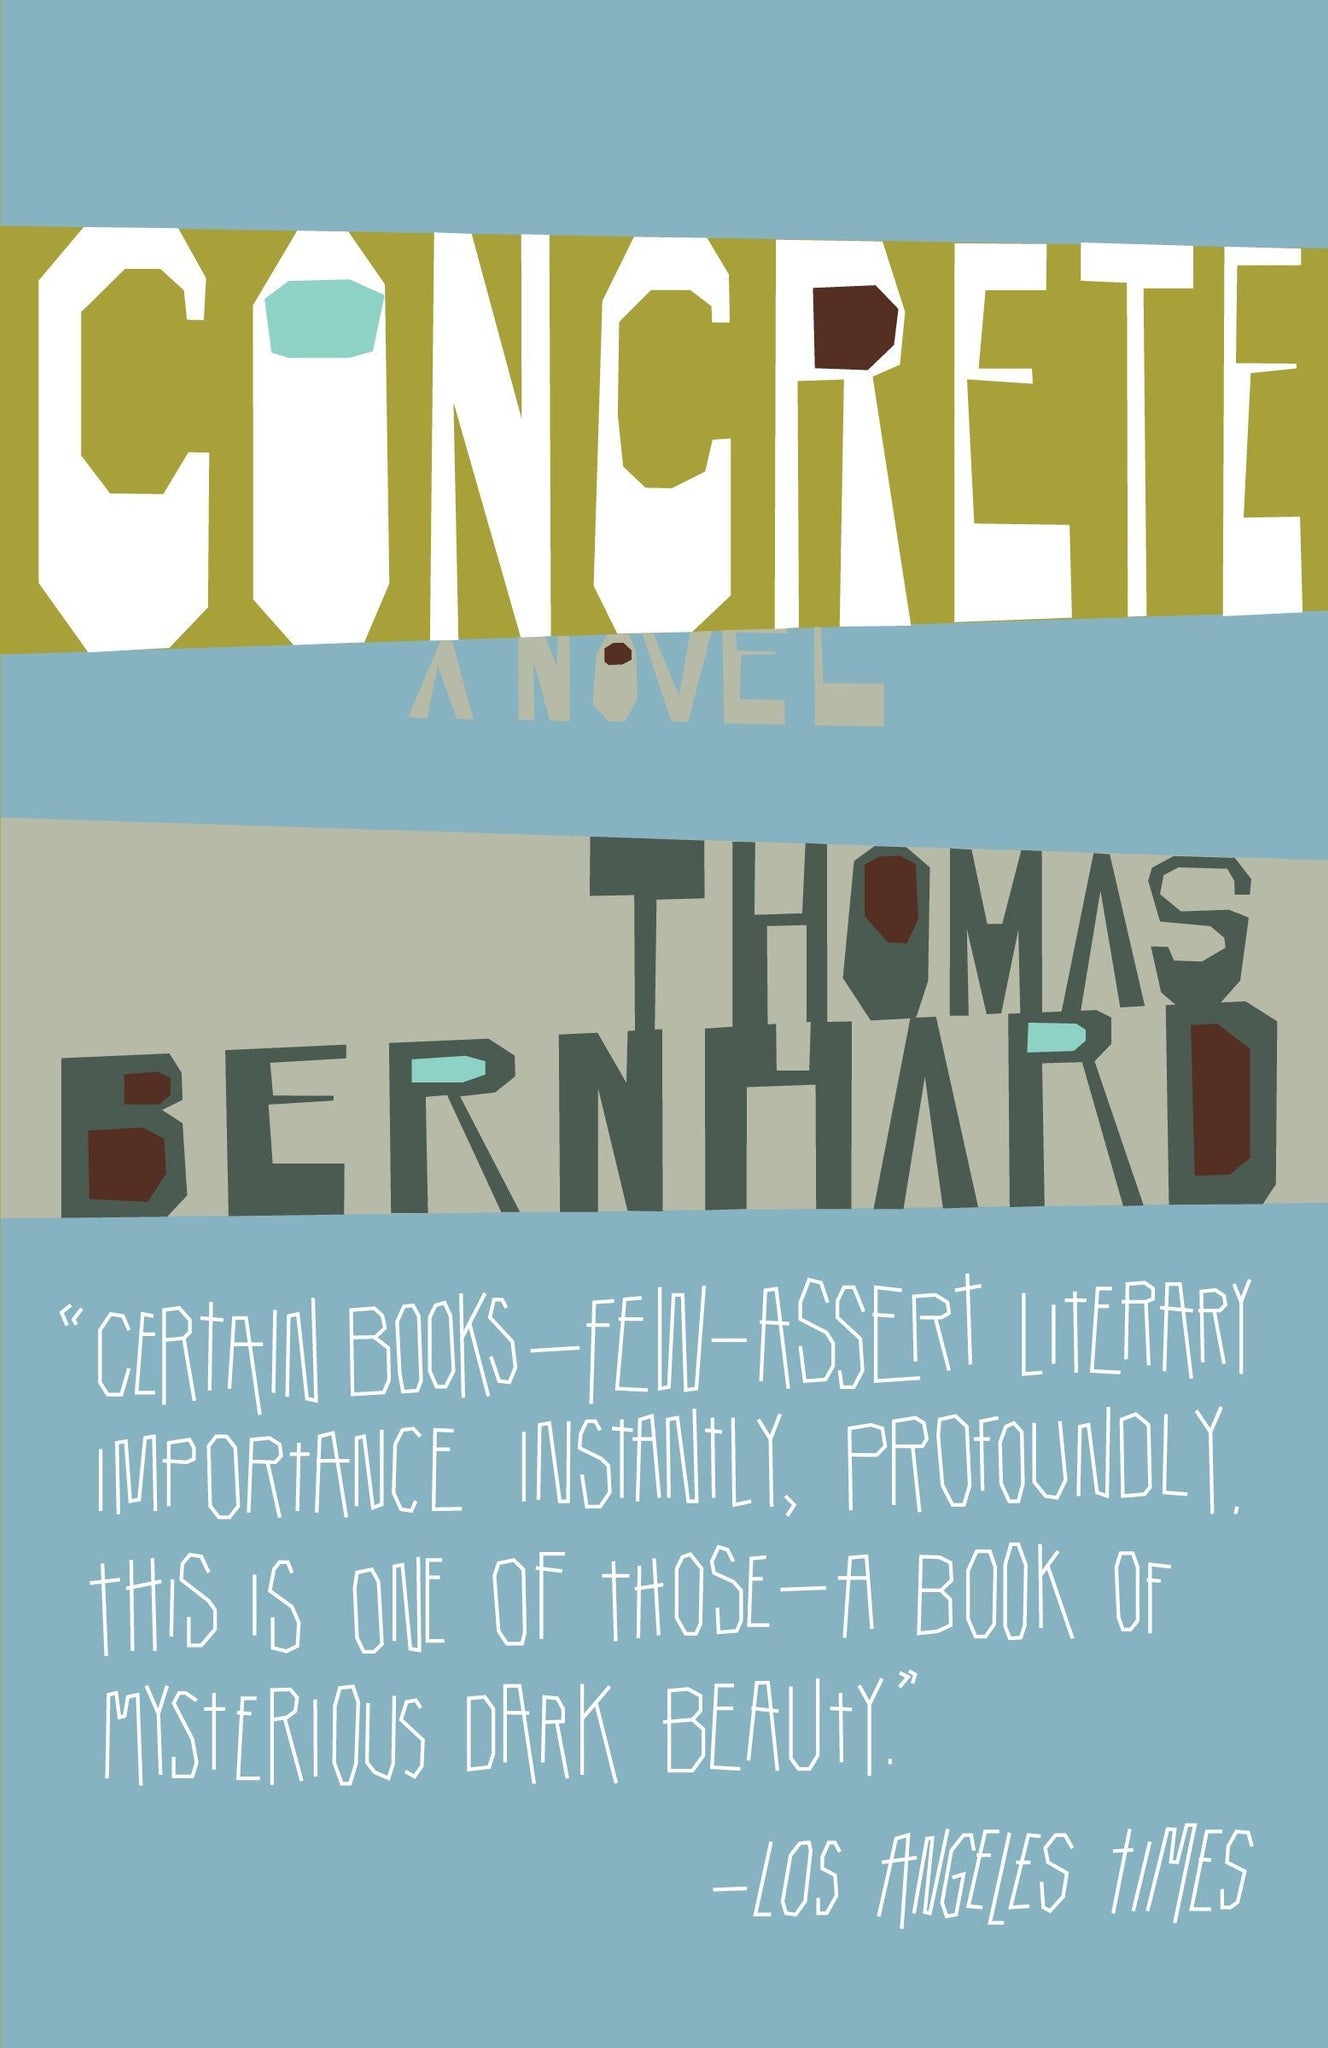 Concrete: A Novel